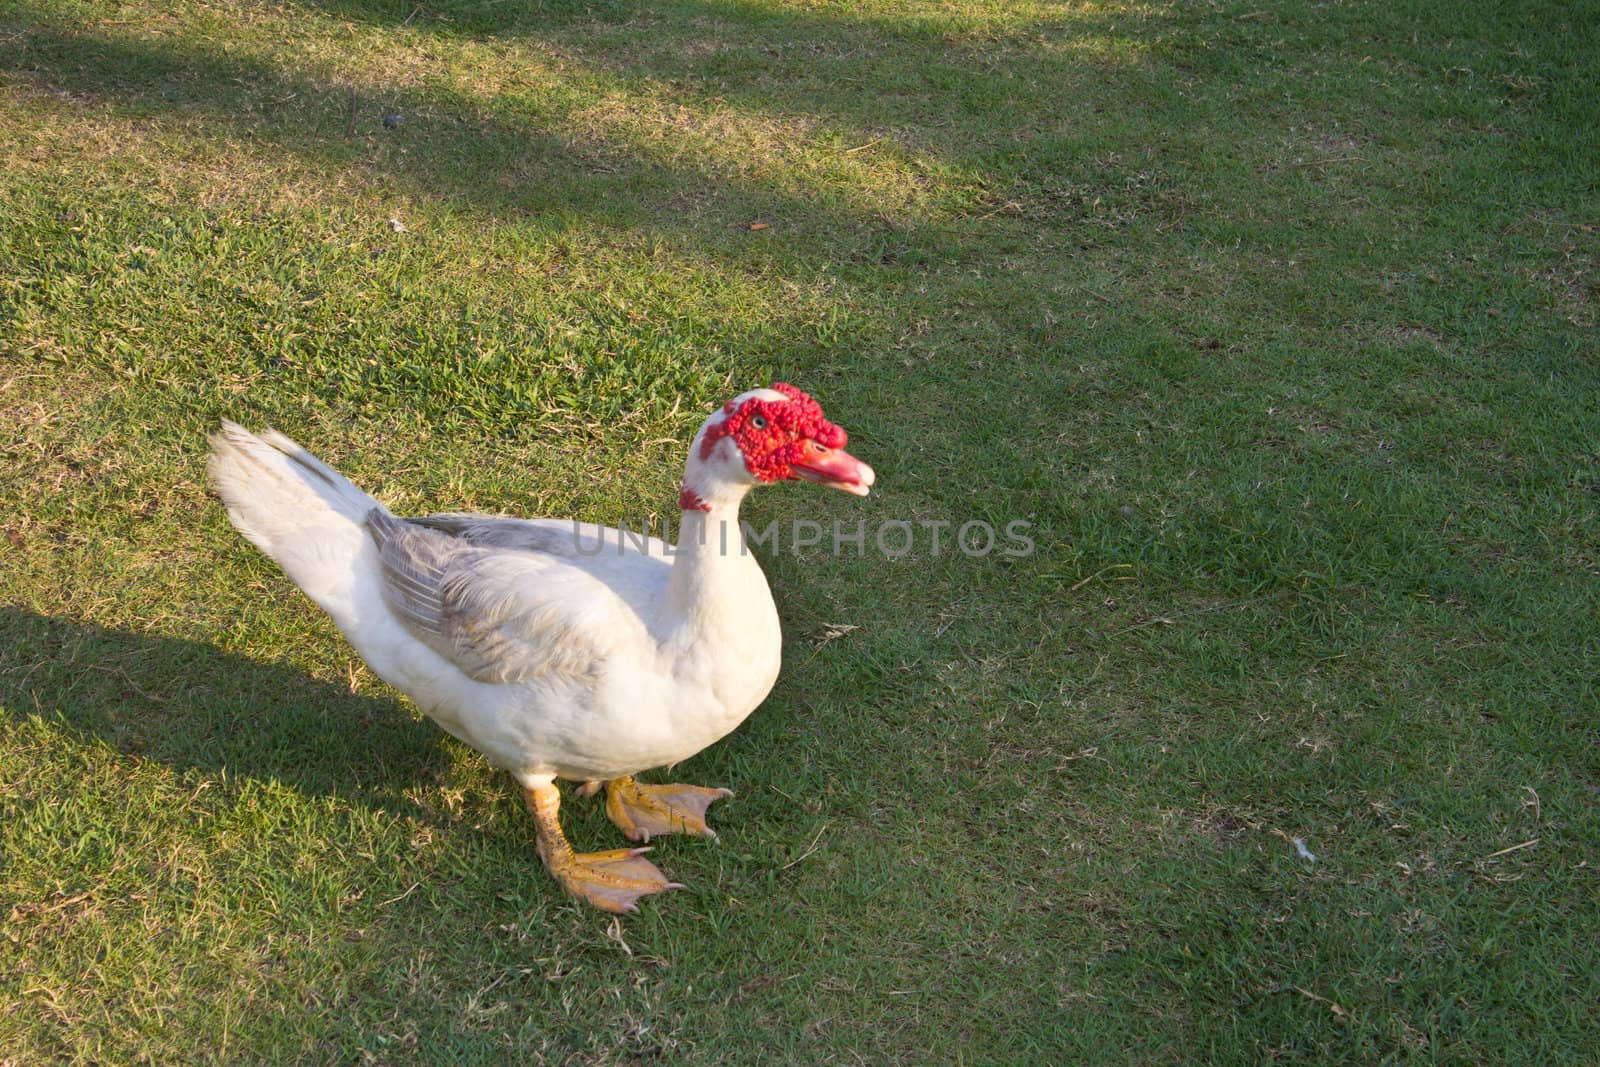 Muscovy duck1 by redthirteen